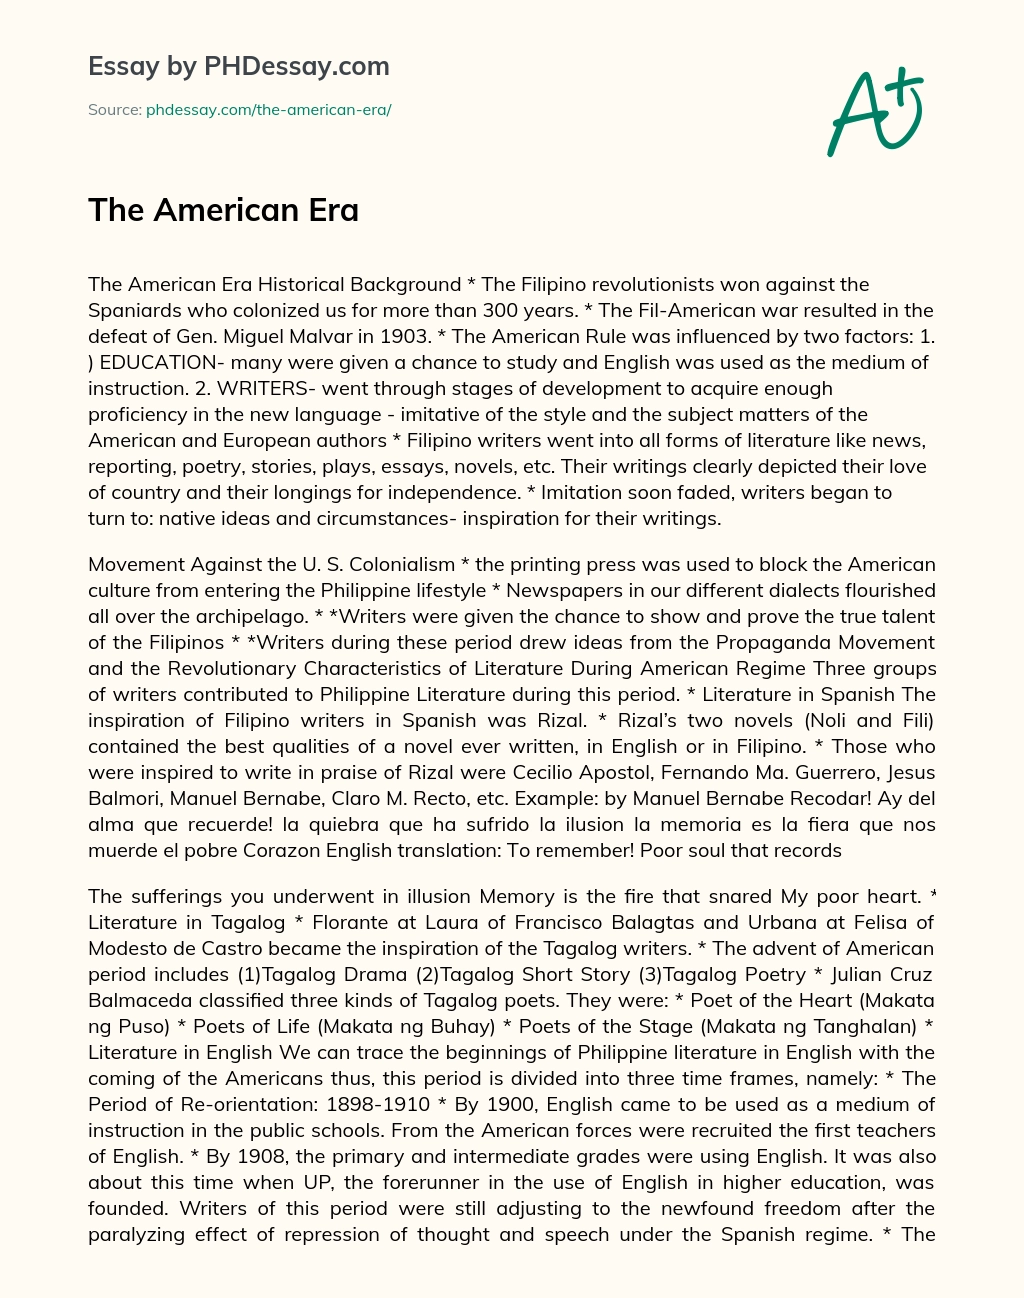 The American Era essay